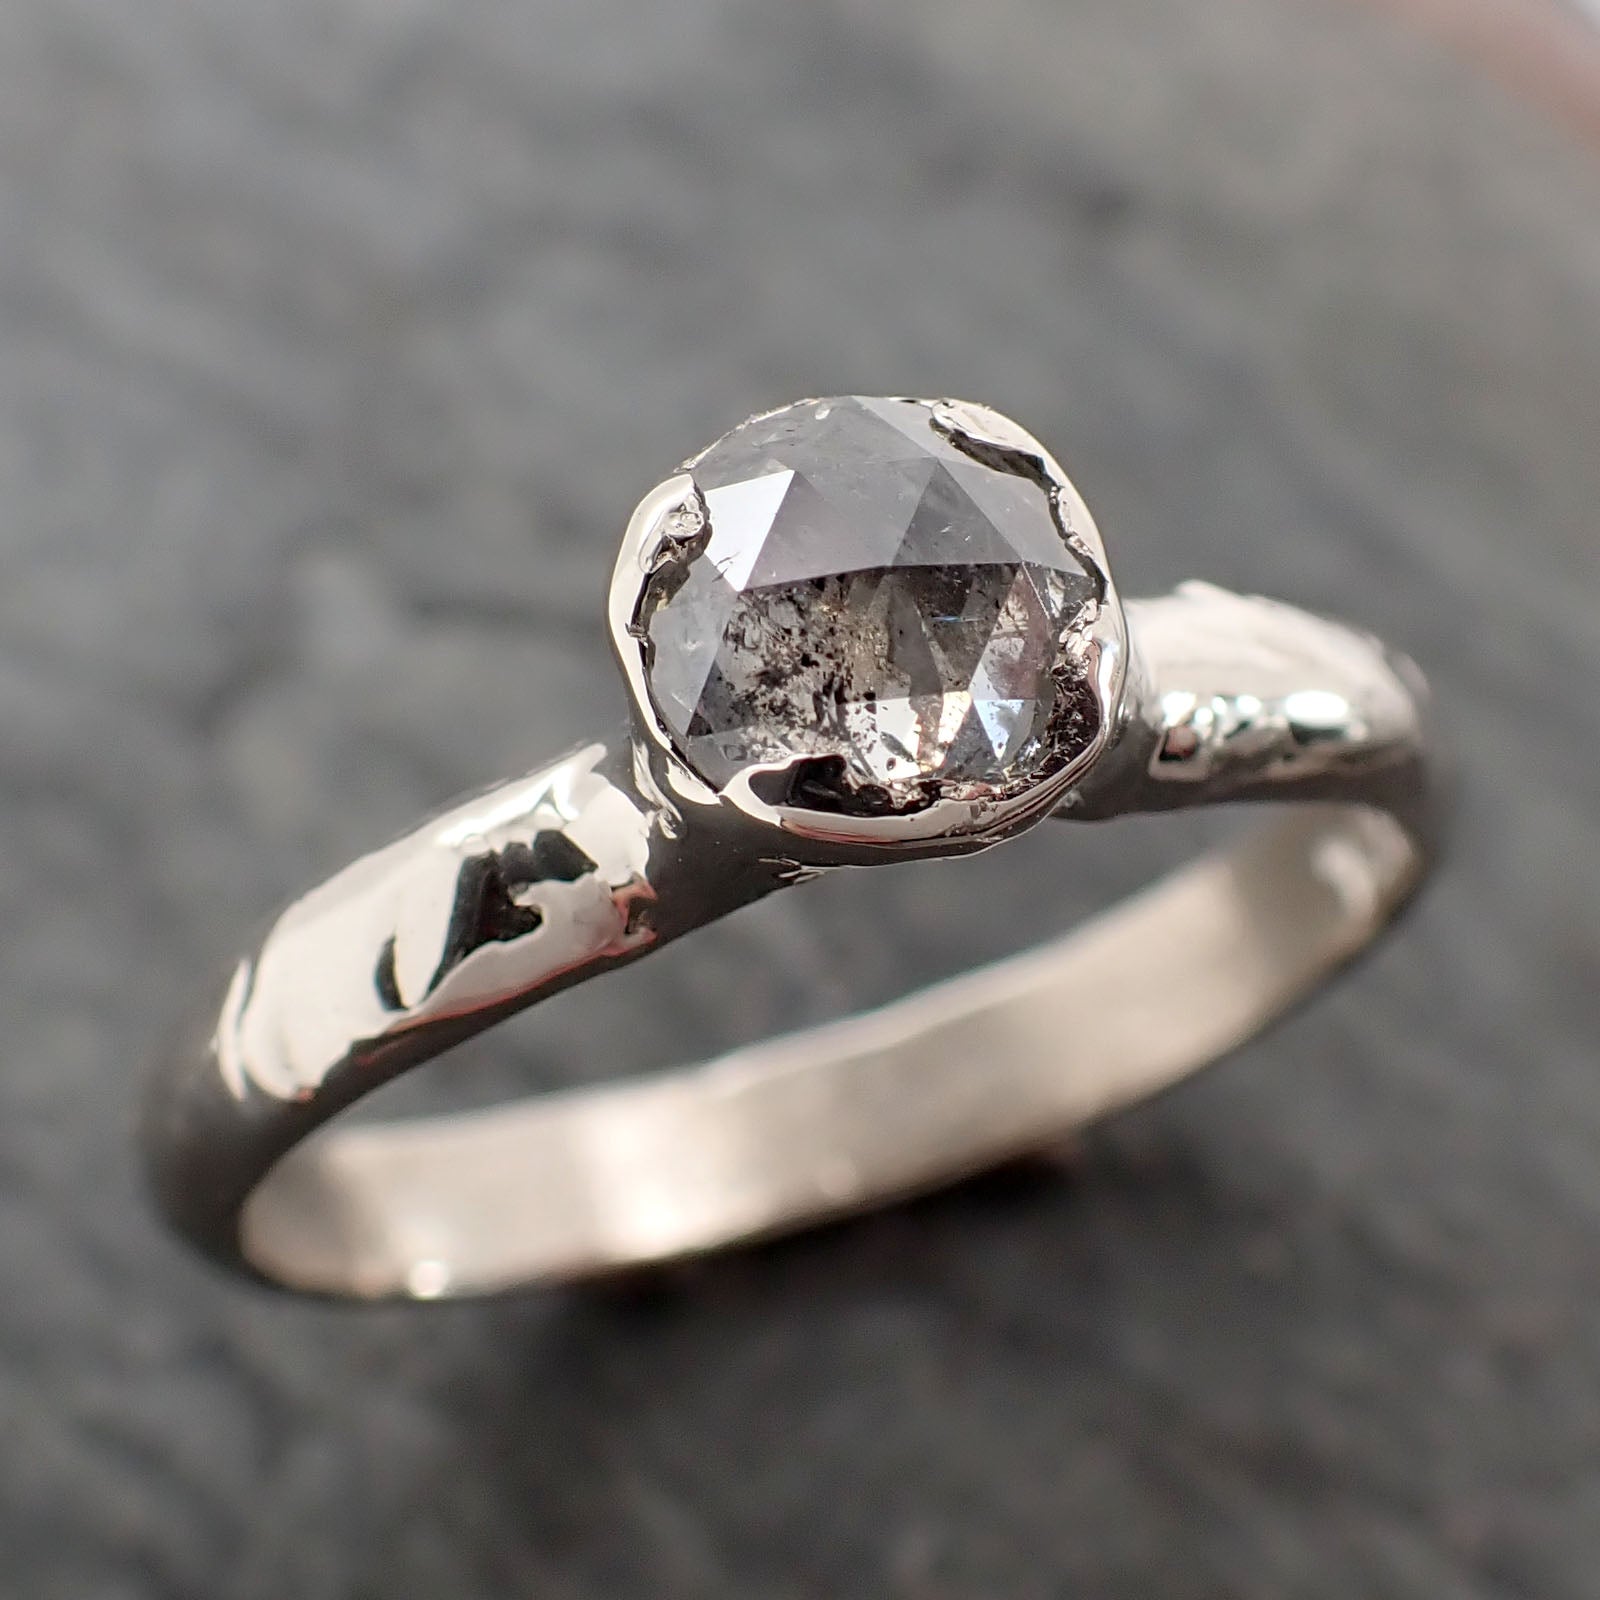 Fancy cut salt and pepper Diamond Solitaire Engagement 18k White Gold Wedding Ring byAngeline 2837